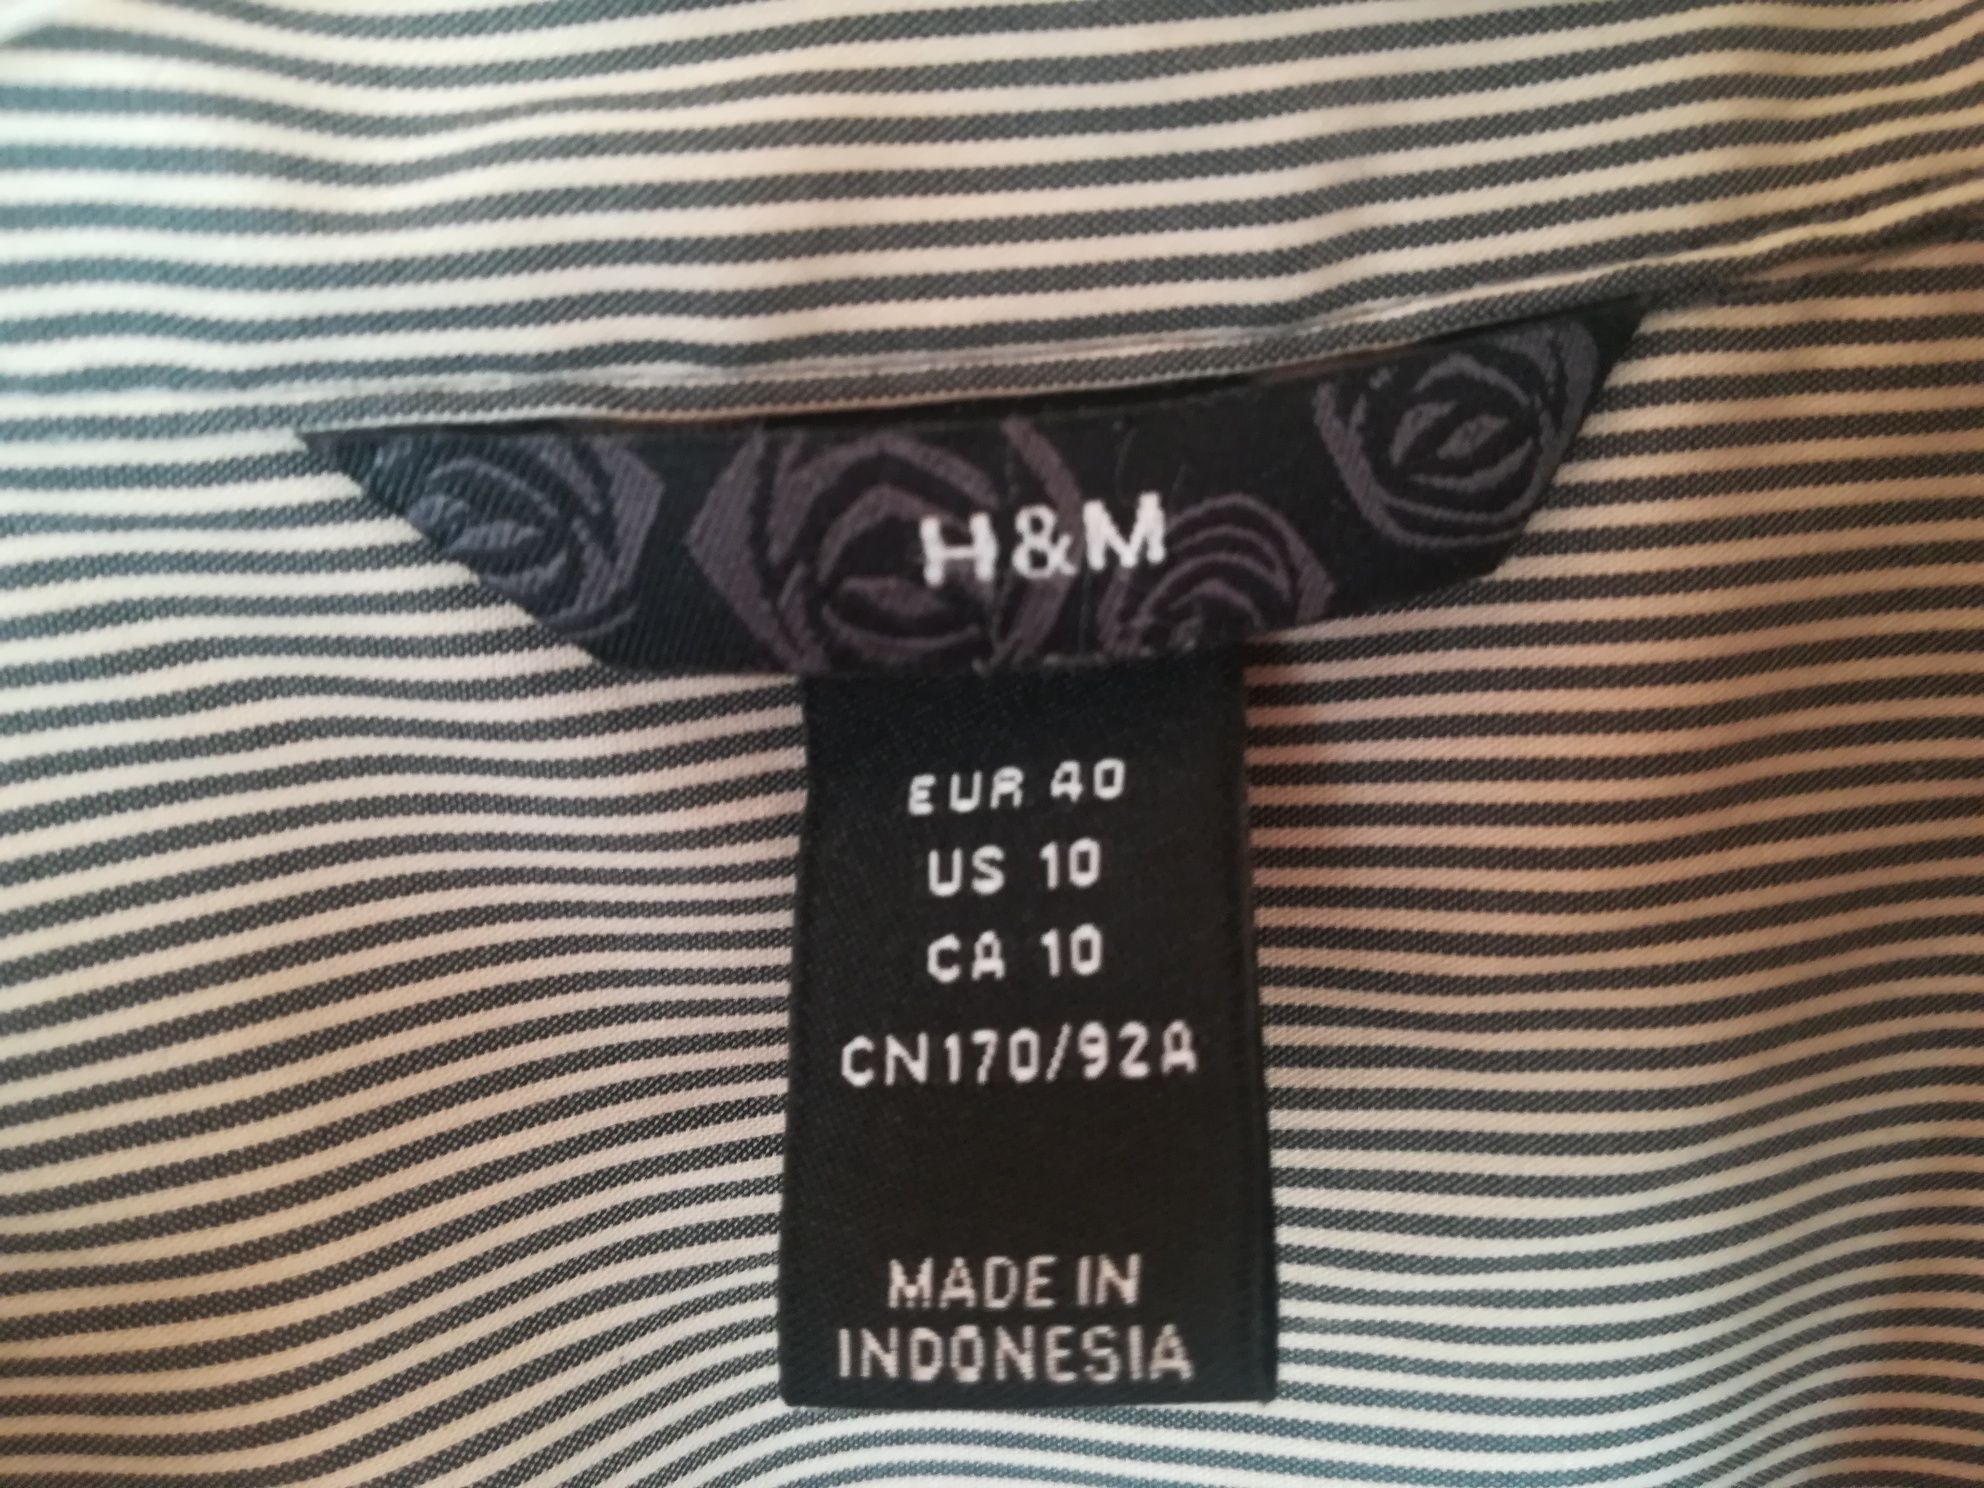 H&M jak nowa bluzka koszula damska biurowa w prążek pasek M 38